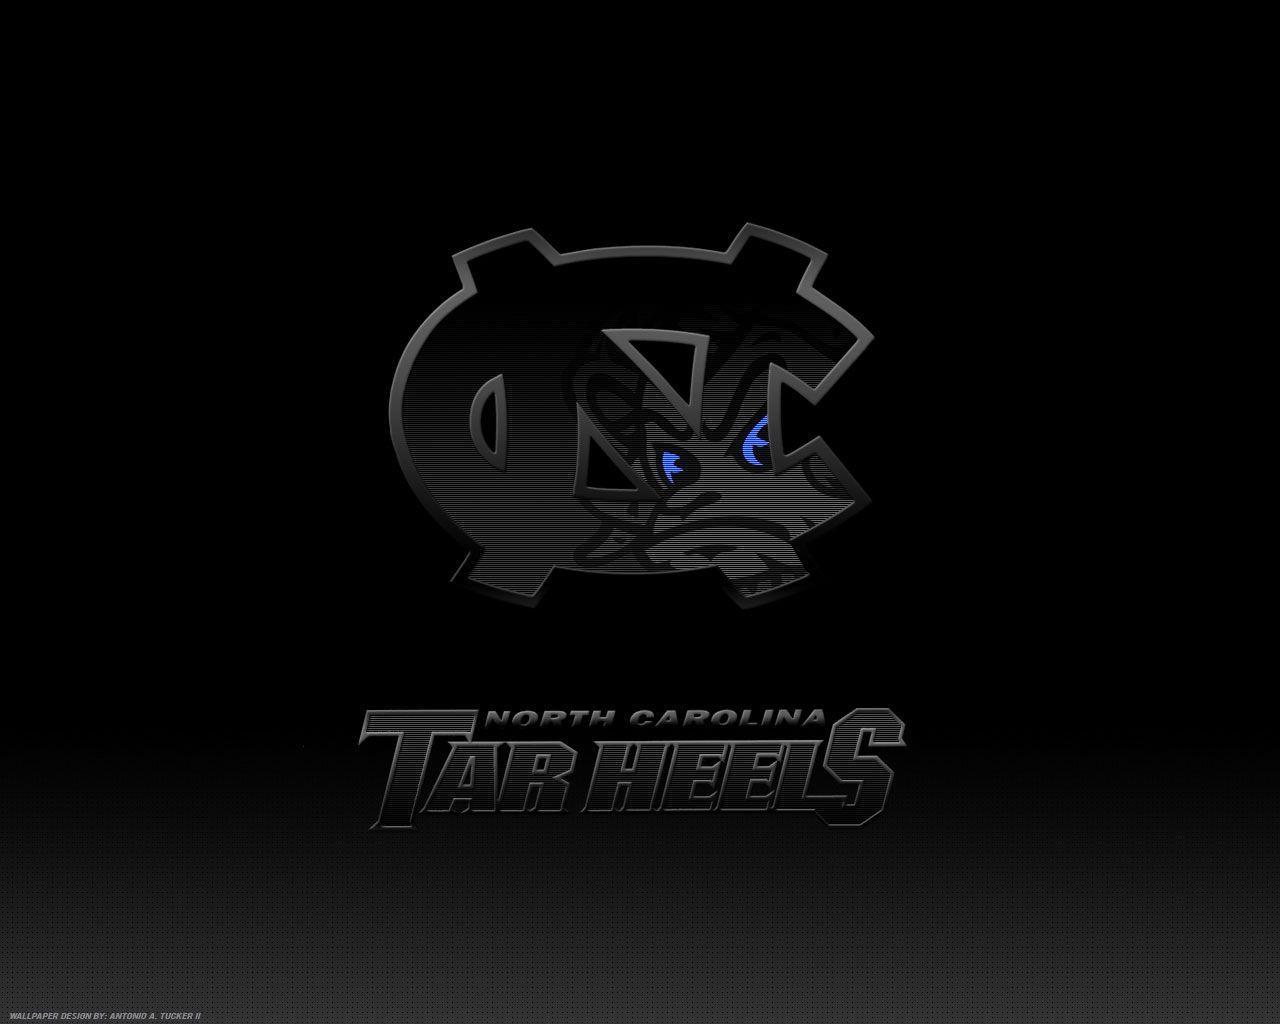 UNC Tar Heels Logo background wallpaper for desktop or web site